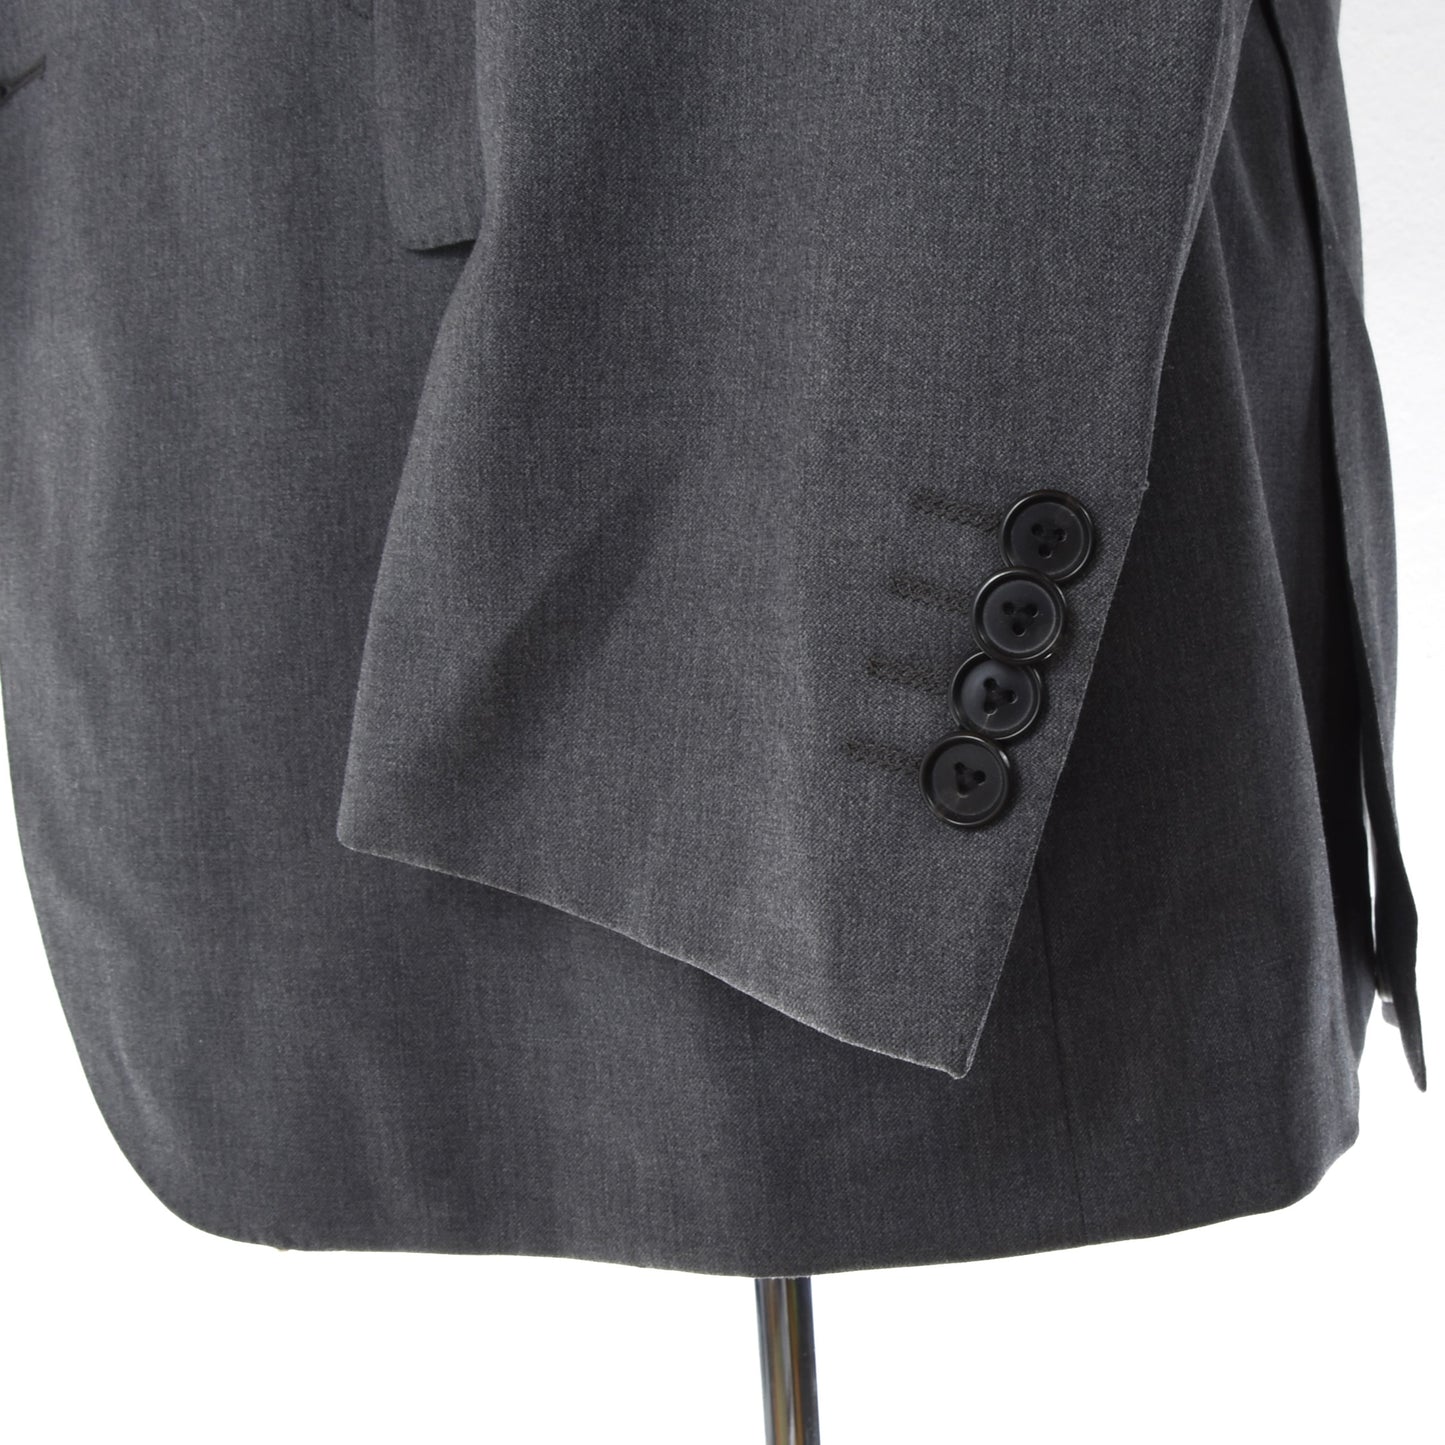 Van Laack 100% Wool Jacket Size 24 - Grey